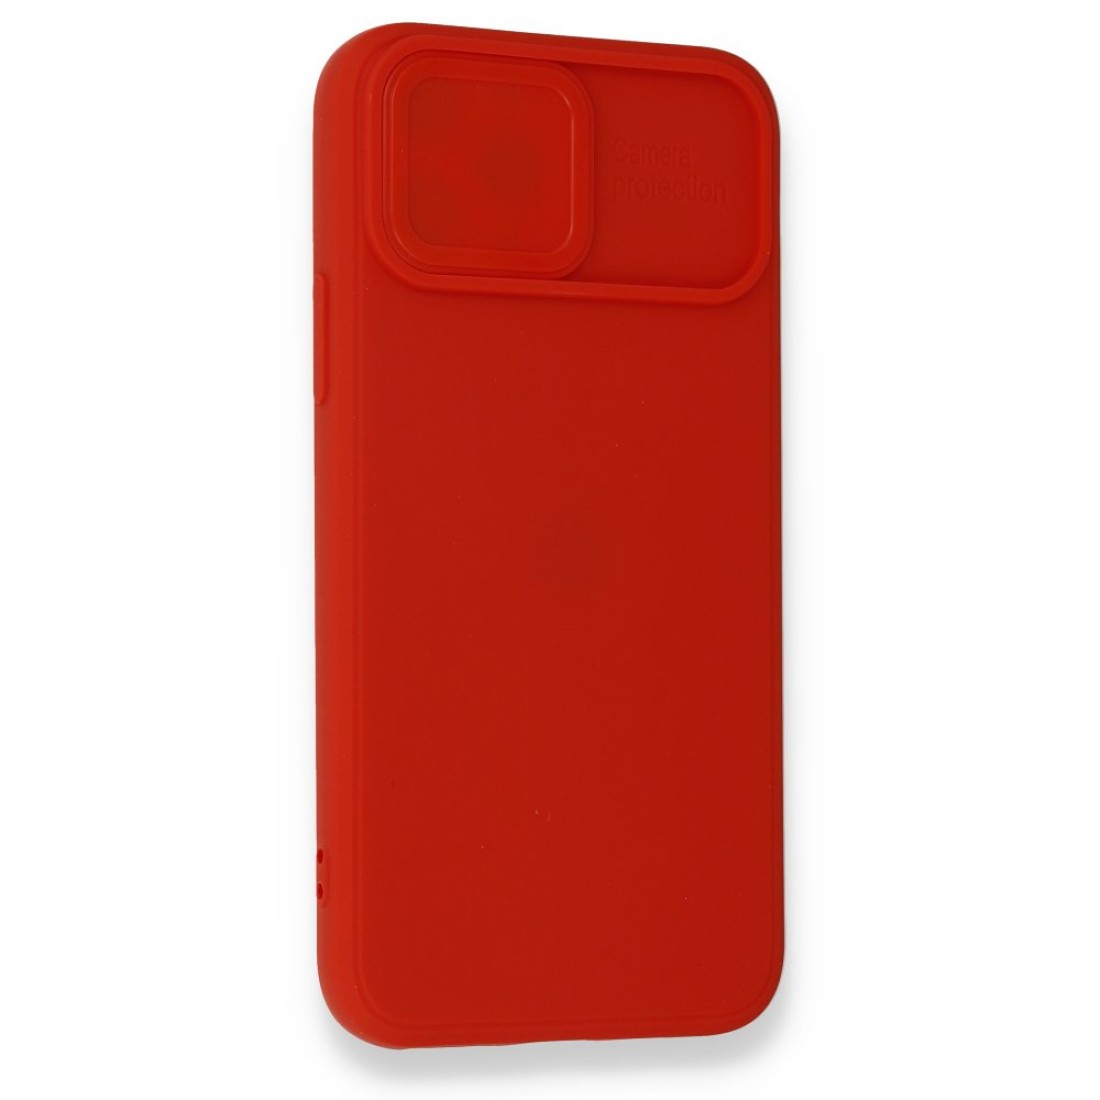 Apple iPhone 11 Pro Max Kılıf Color Lens Silikon - Kırmızı